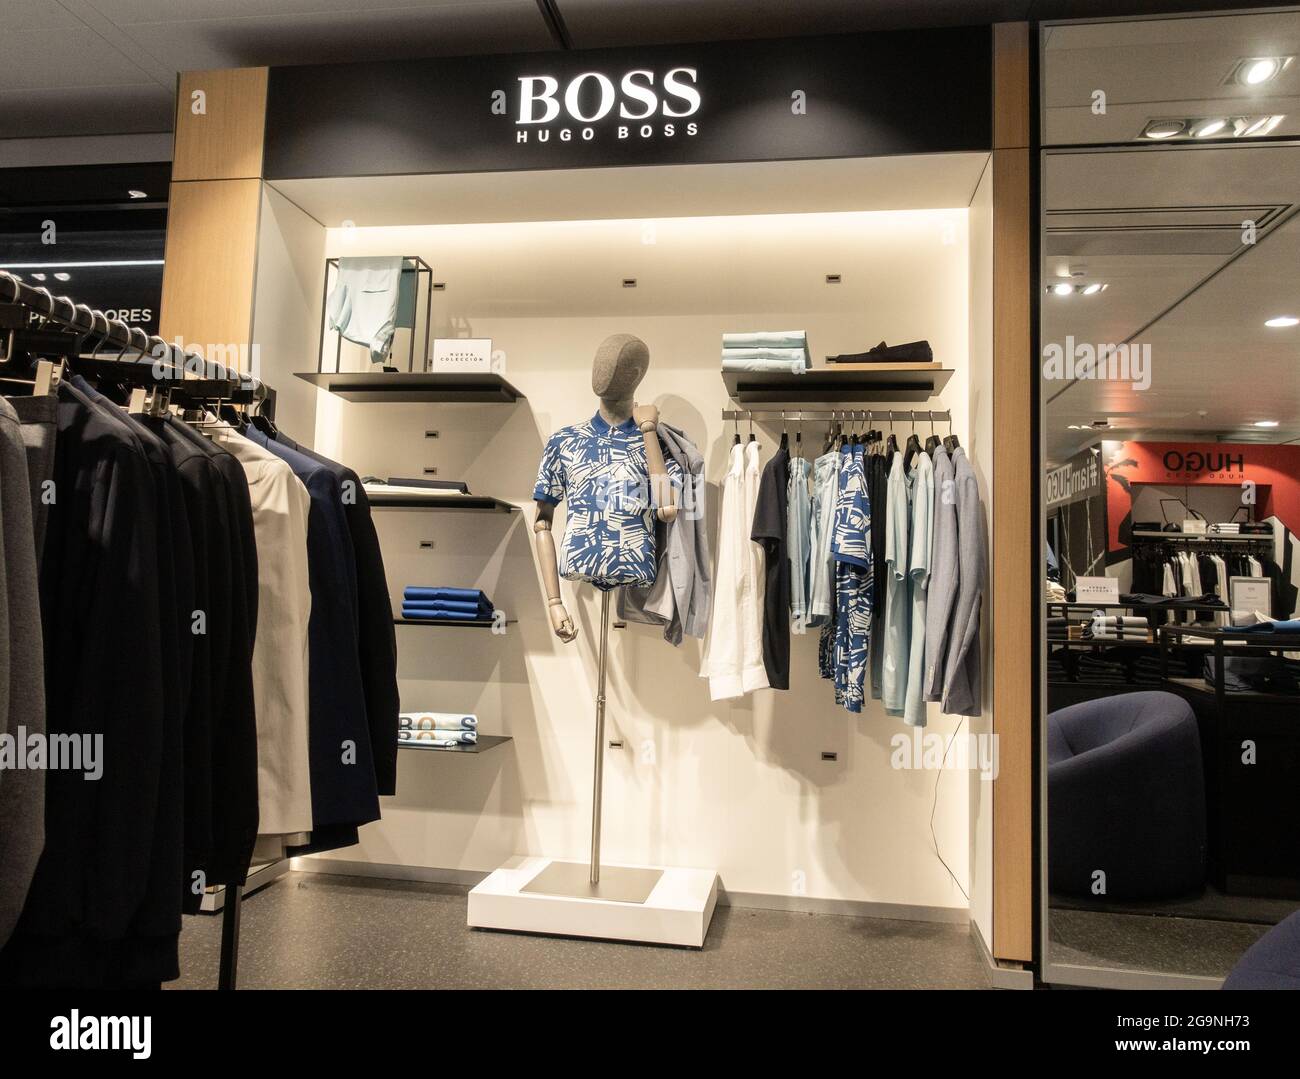 Hugo Boss store display Stock - Alamy